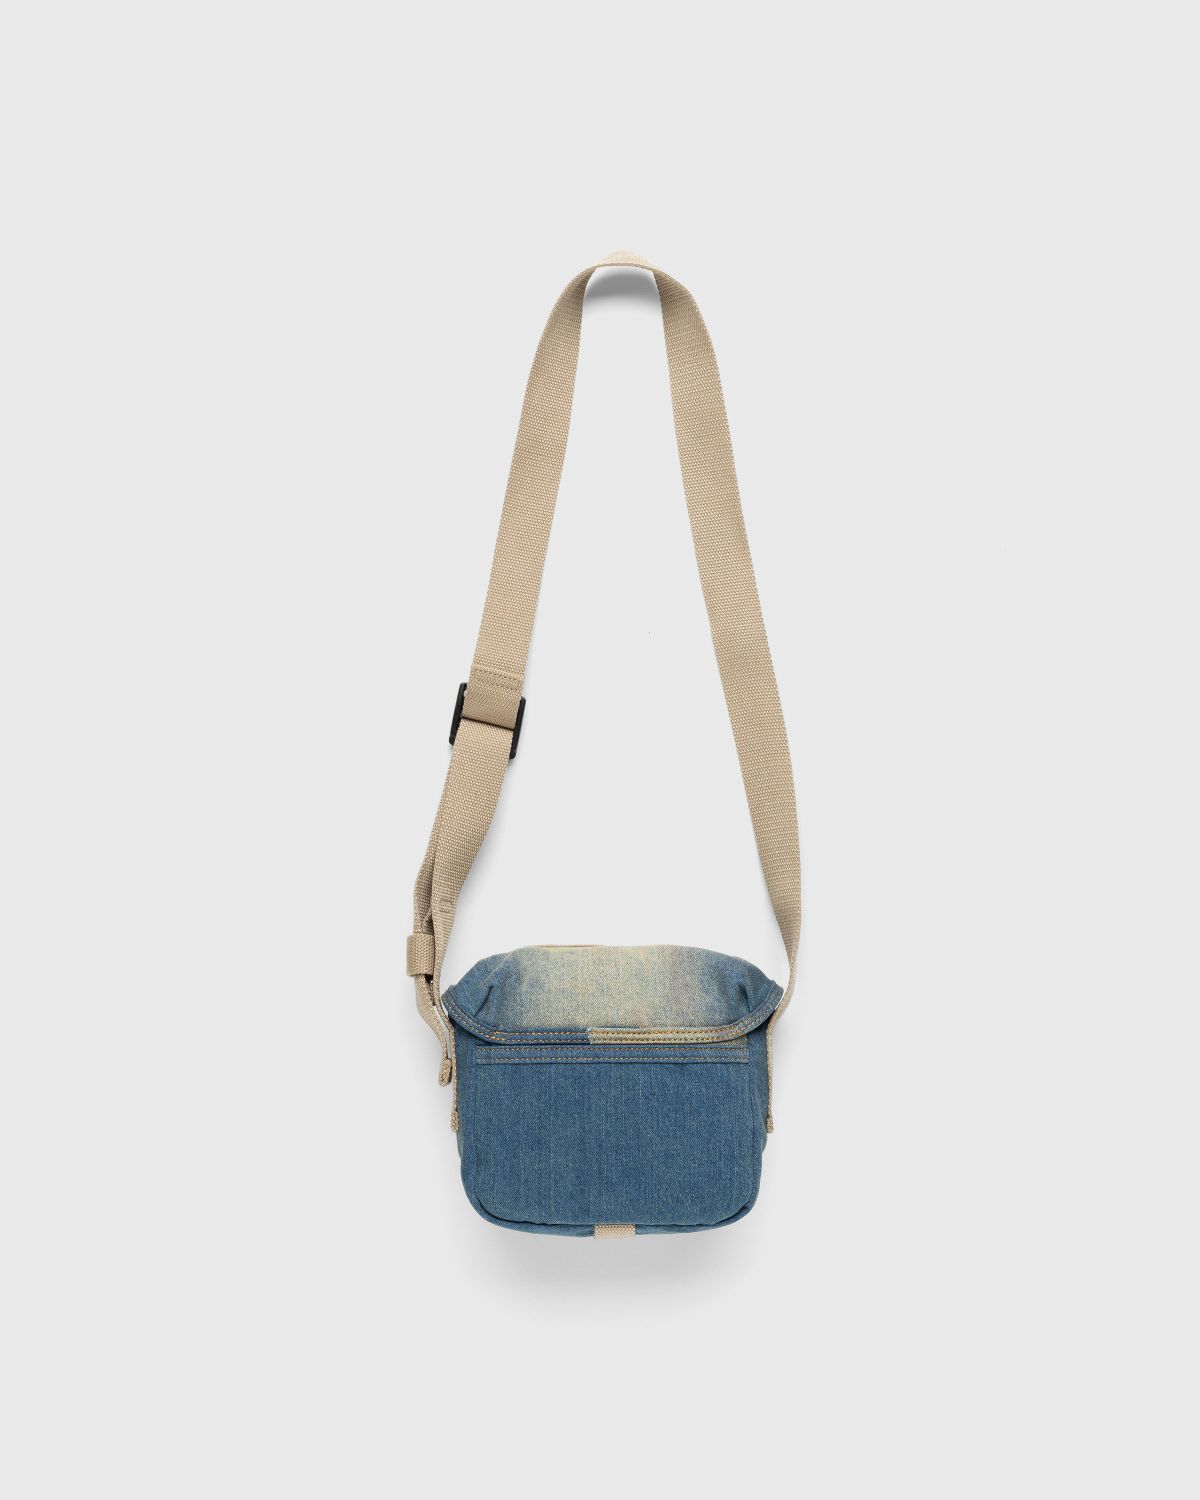 Acne Studios – Mini Messenger Bag Light Blue/Beige - Bags - Multi - Image 2